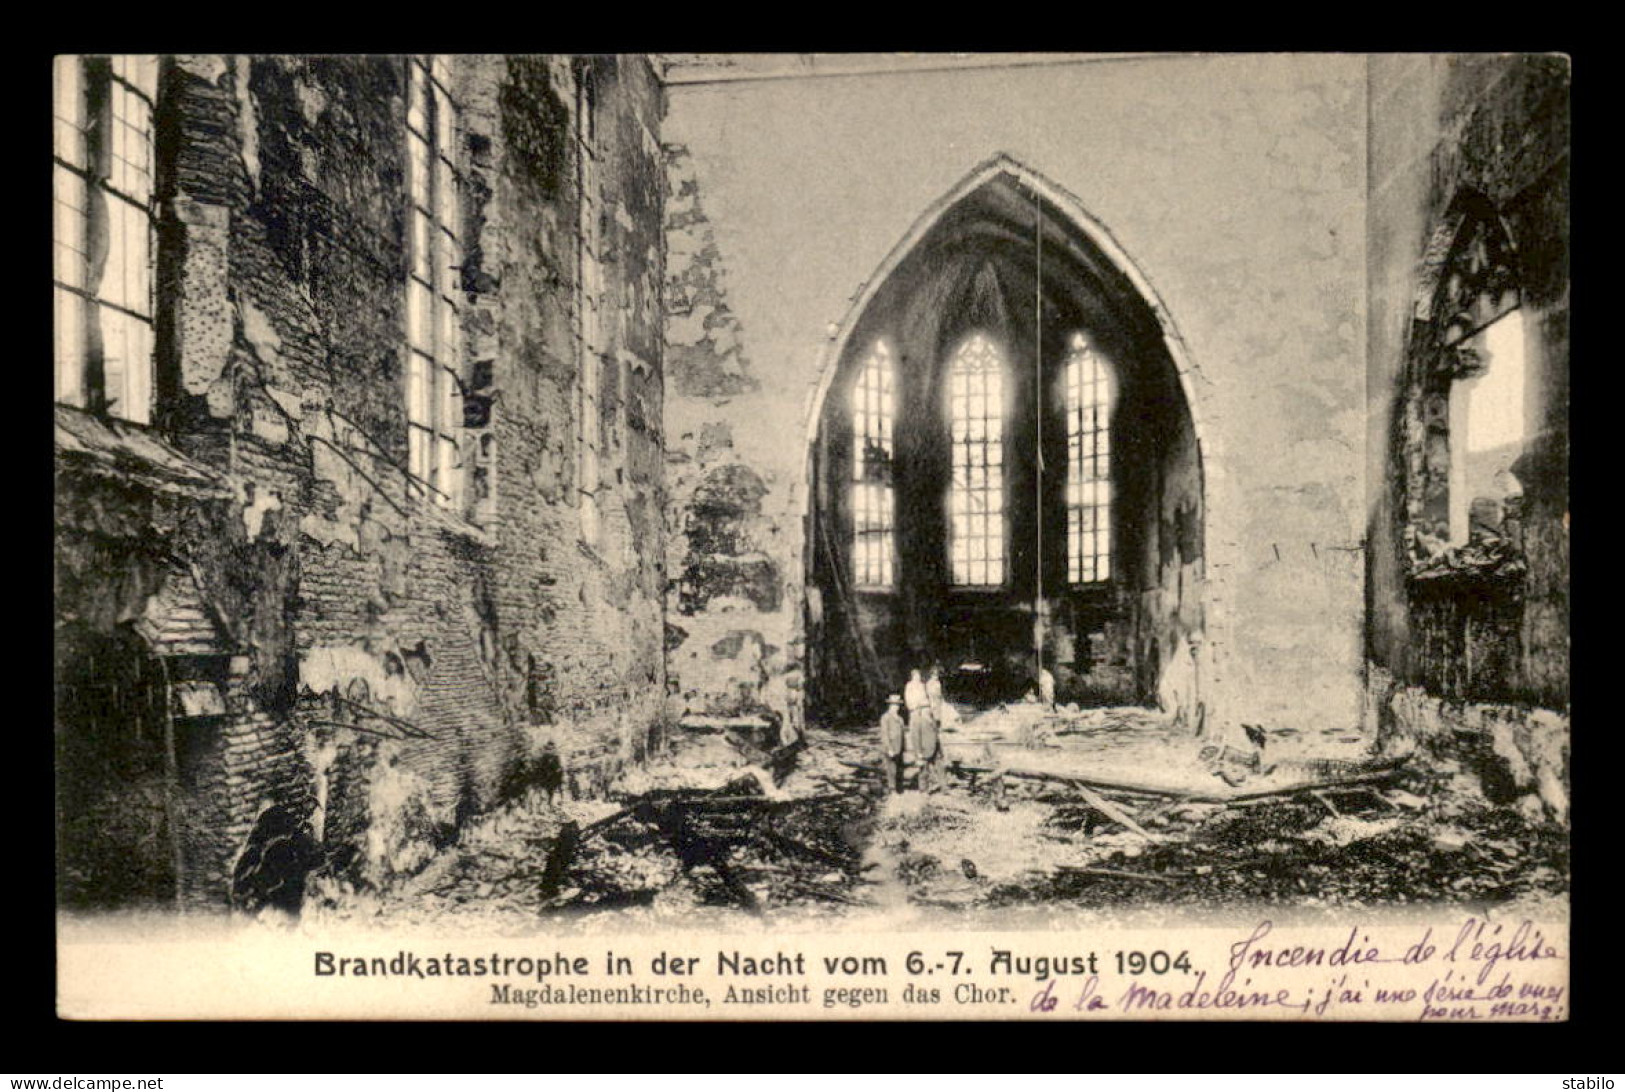 67 - STRASBOURG - INCENDIE DE L'EGLISE DE LA MADELEINE 6-7 AOUT 1904 - Strasbourg